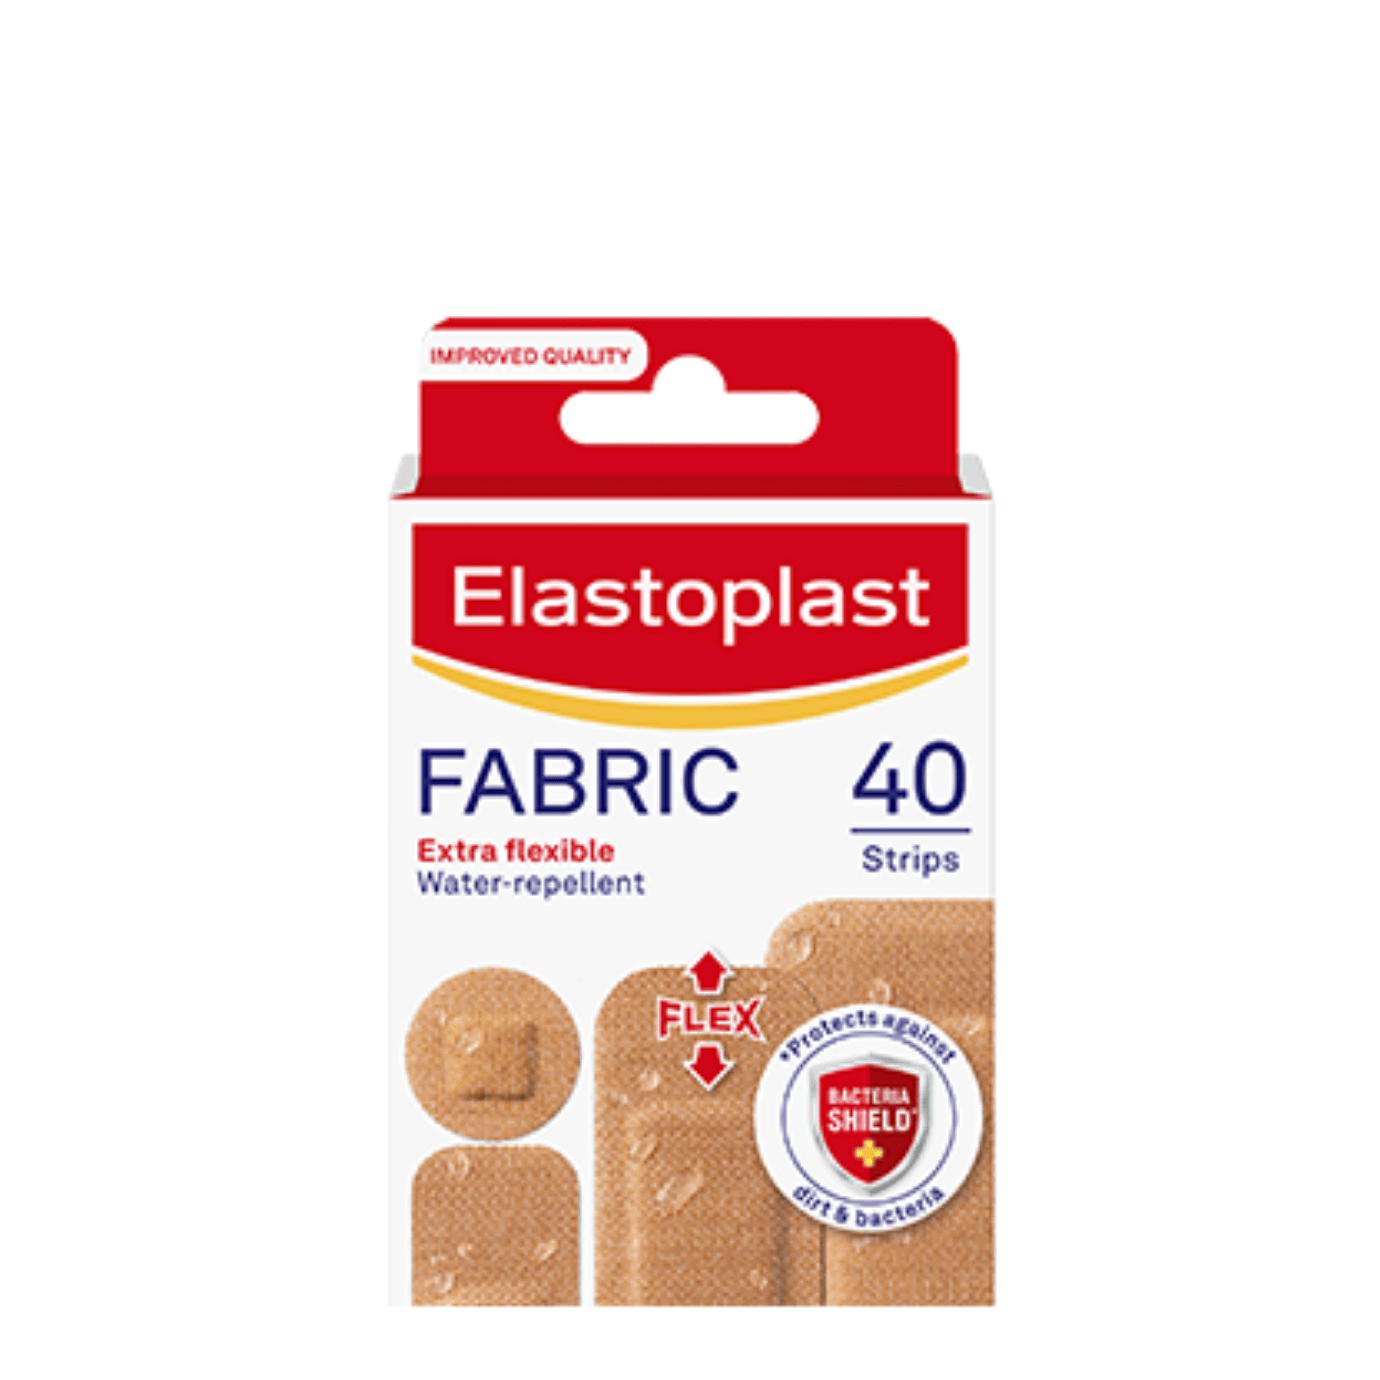 Packshot of Elastoplast Fabric 40 strips assorted